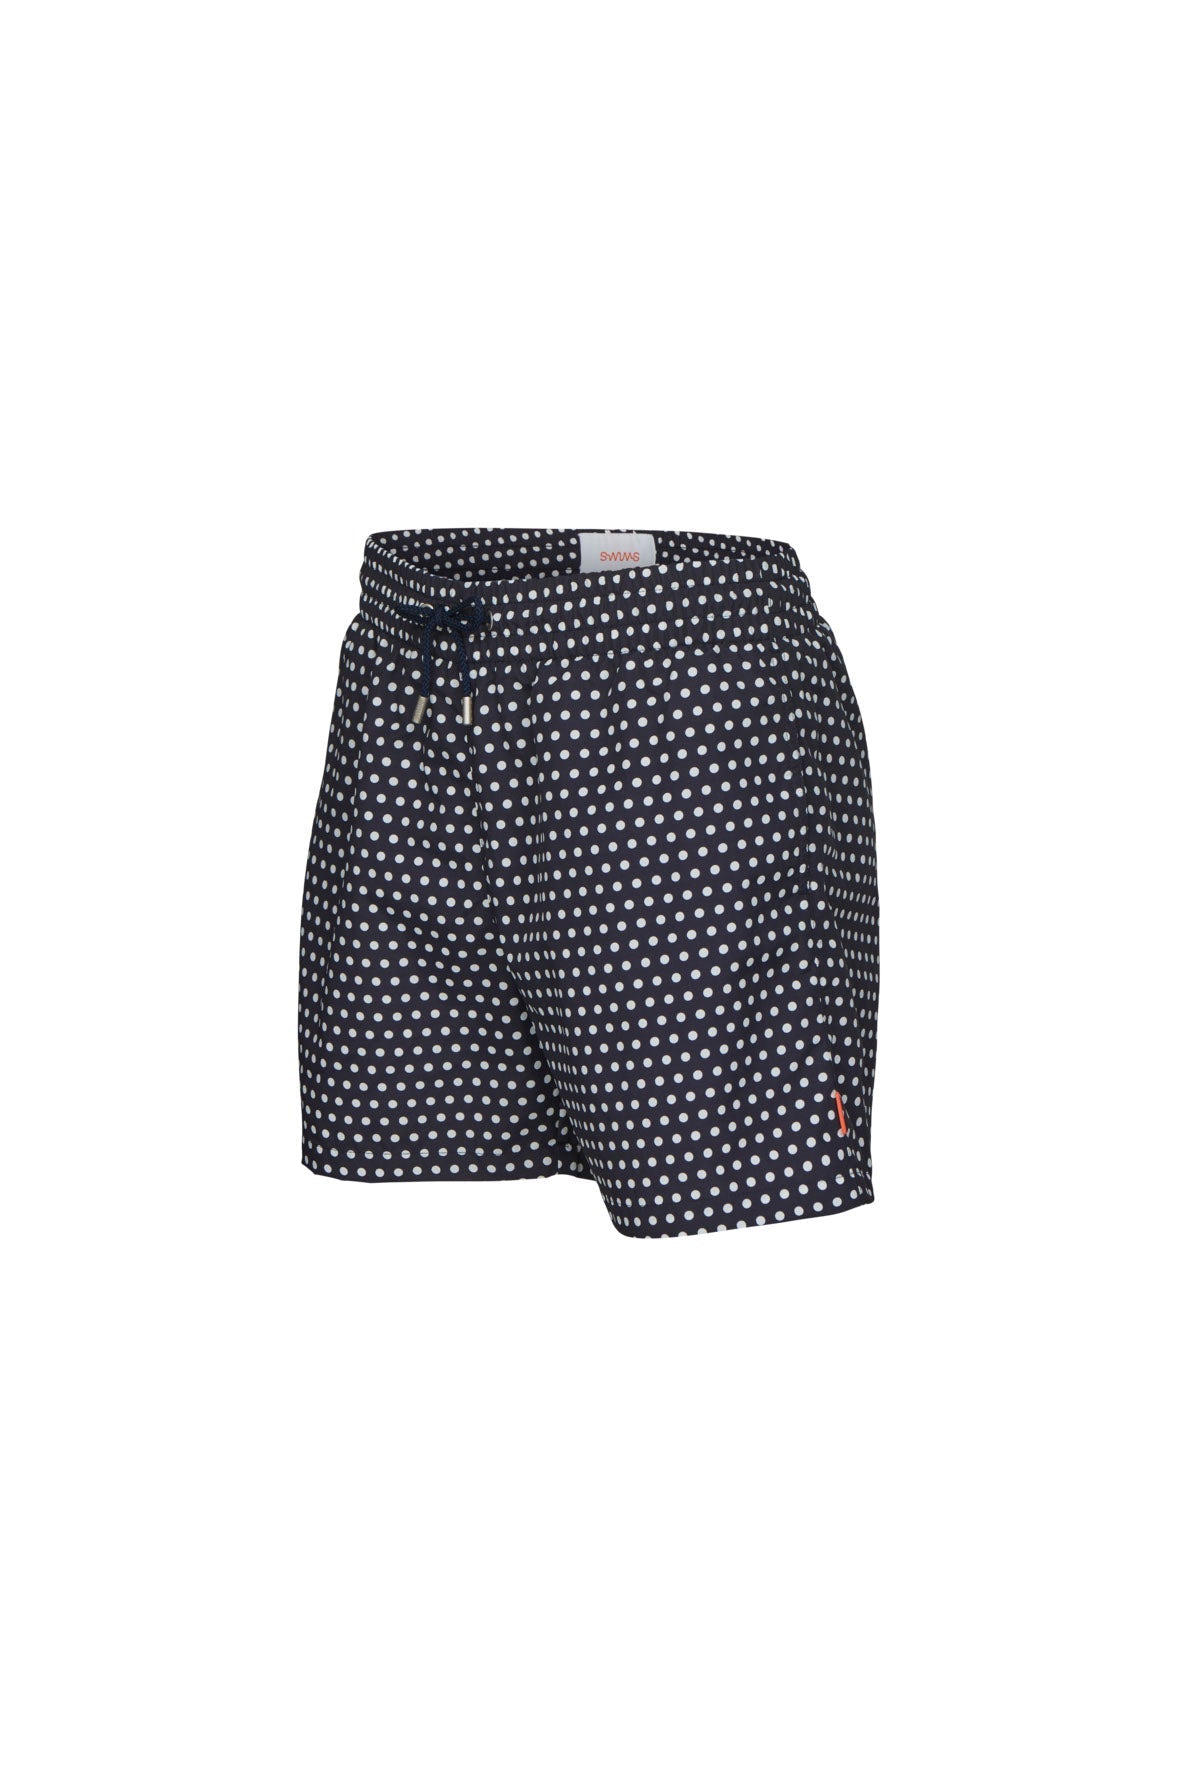 The Printed Swim Shorts - Navy/White Dots